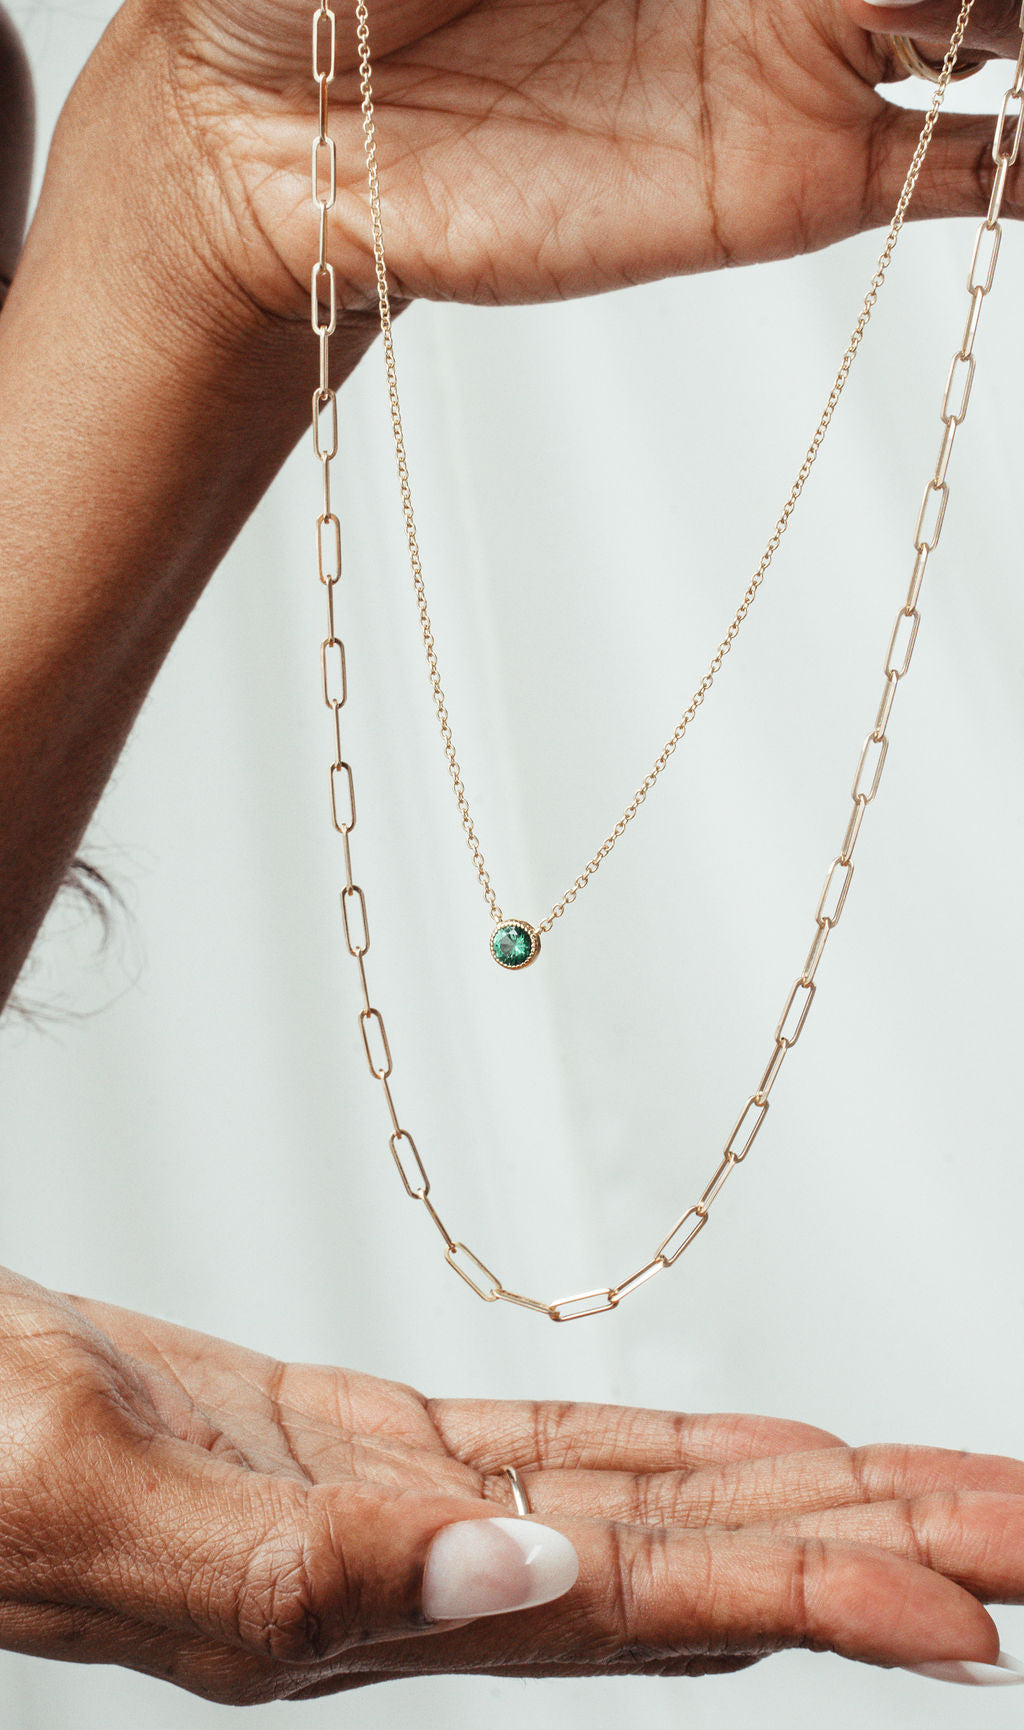 Emeralds: The Vivid Green Gemstone Full Of Life